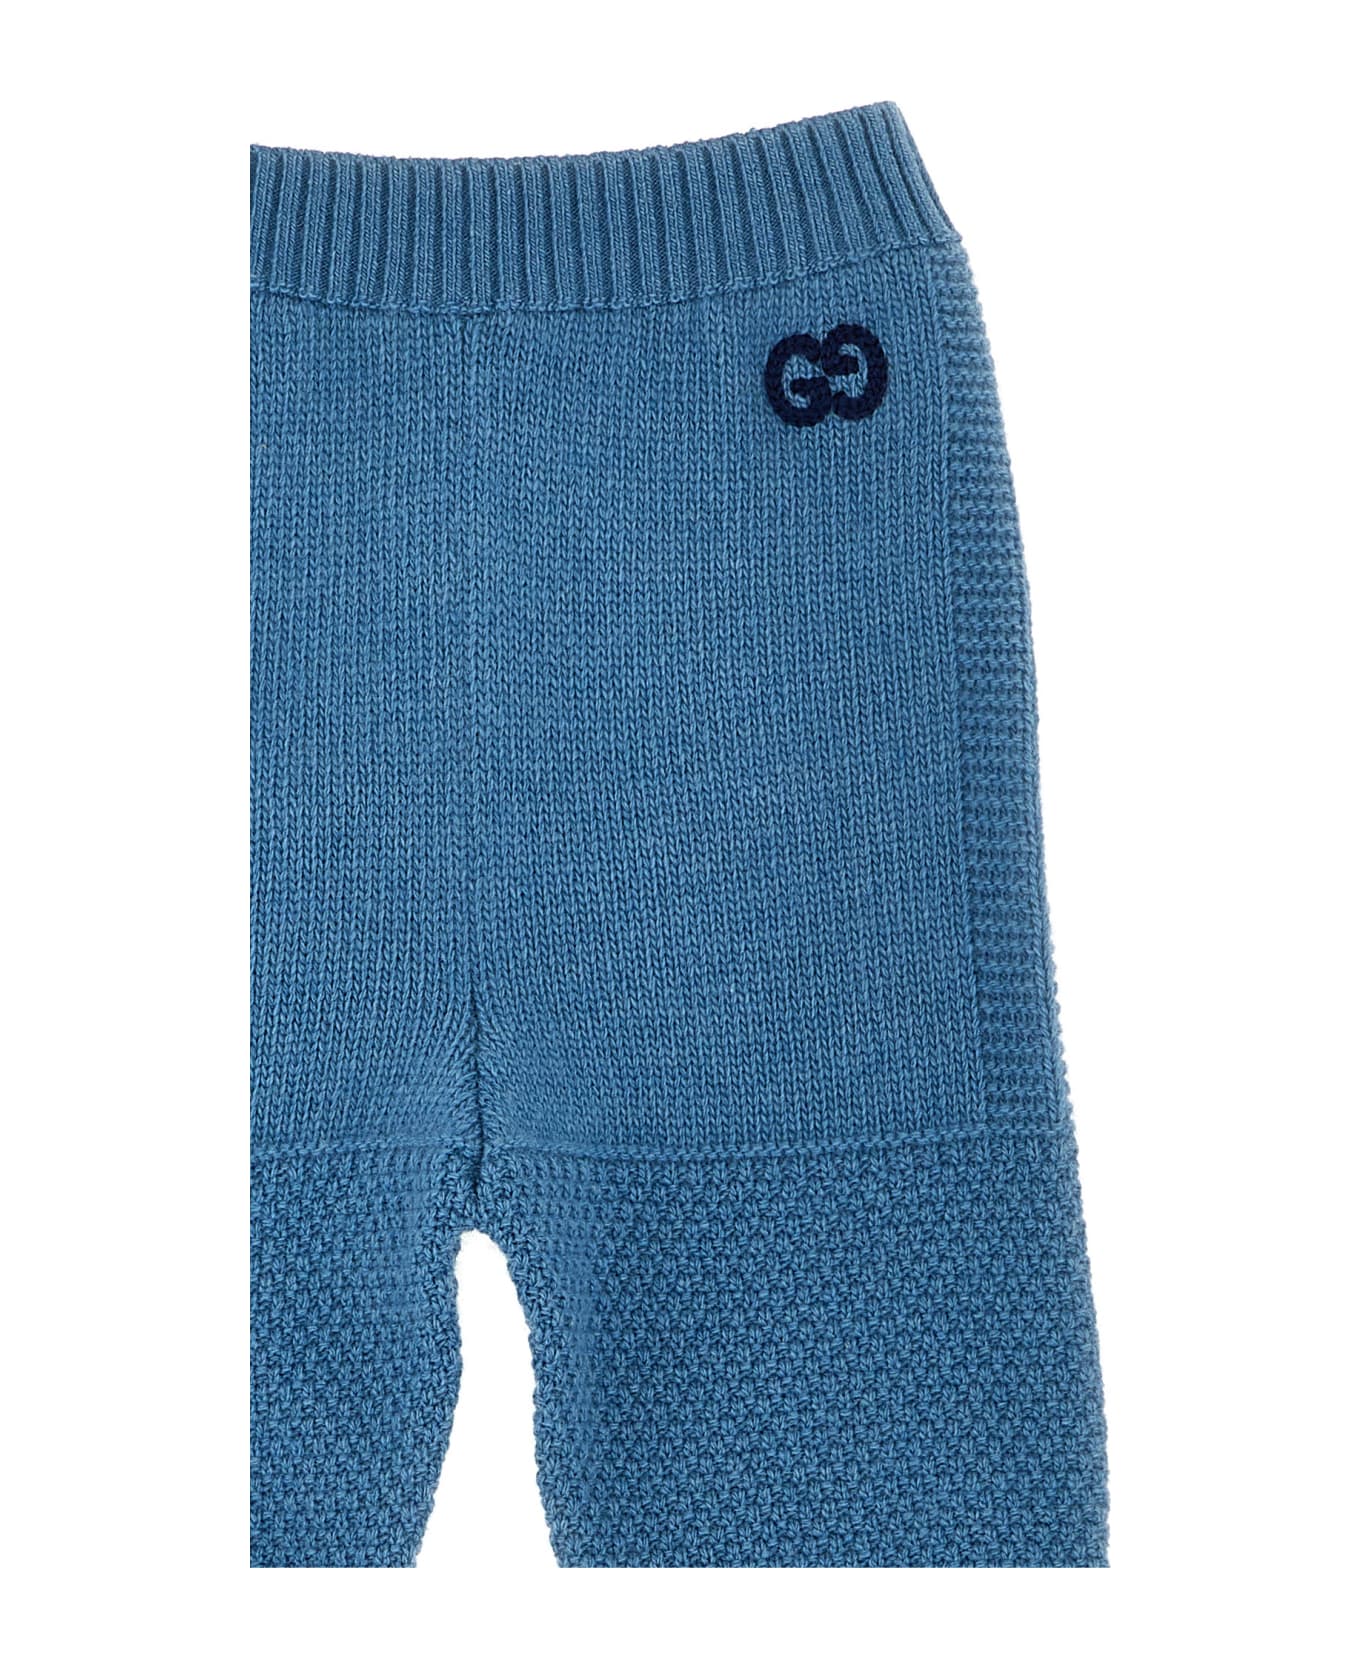 Gucci Logo Embroidery Pants - Blu